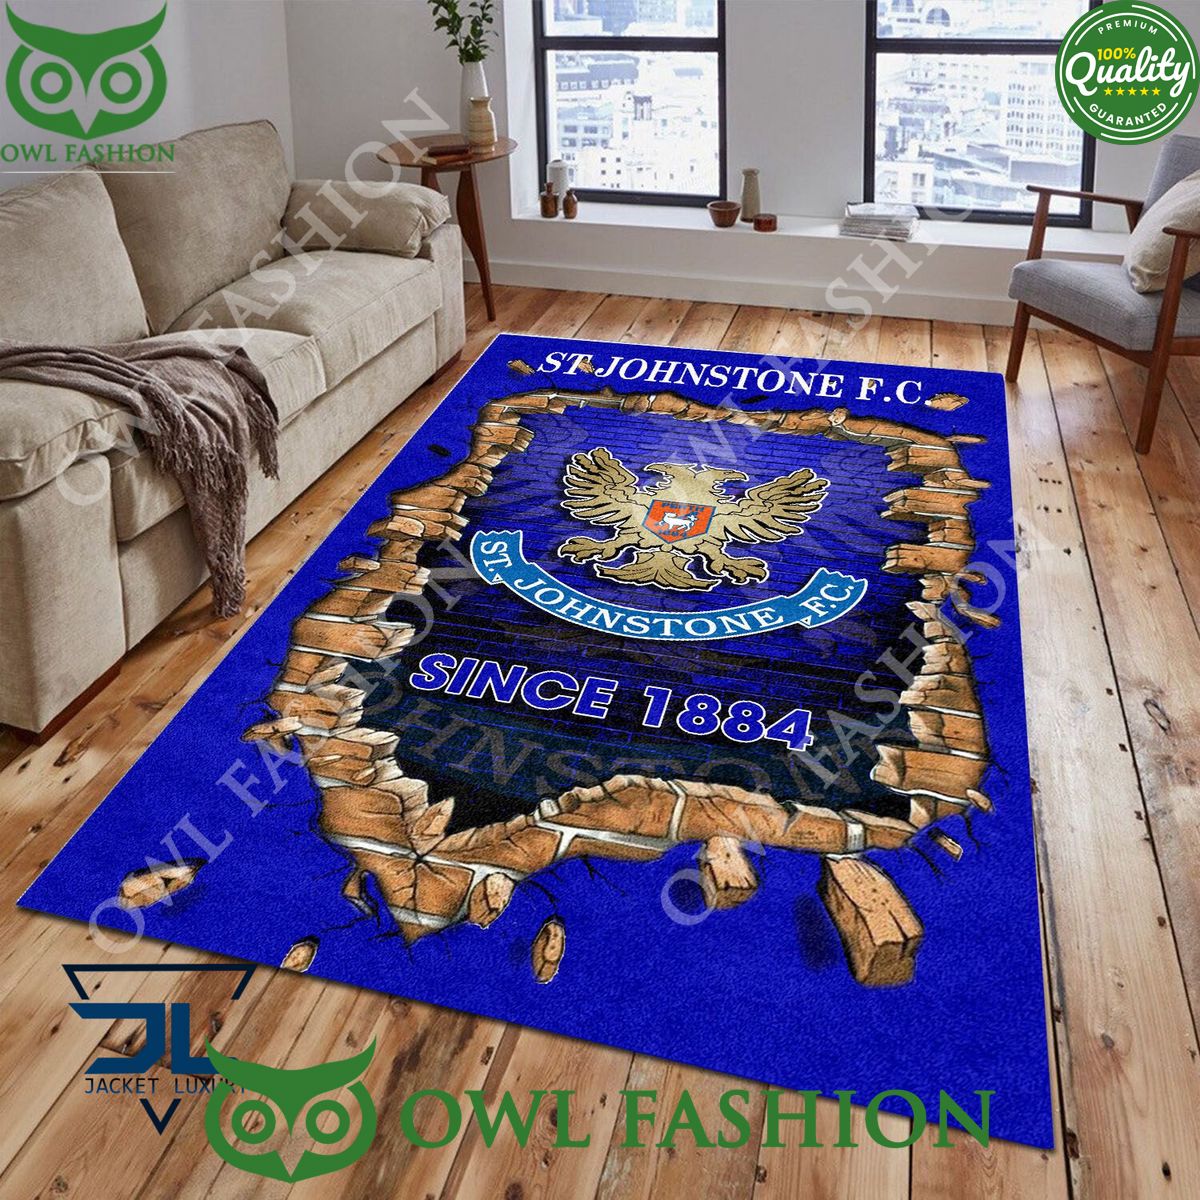 St Johnstone F.C. 1790 Scottish Broken Wall Living Room Carpet